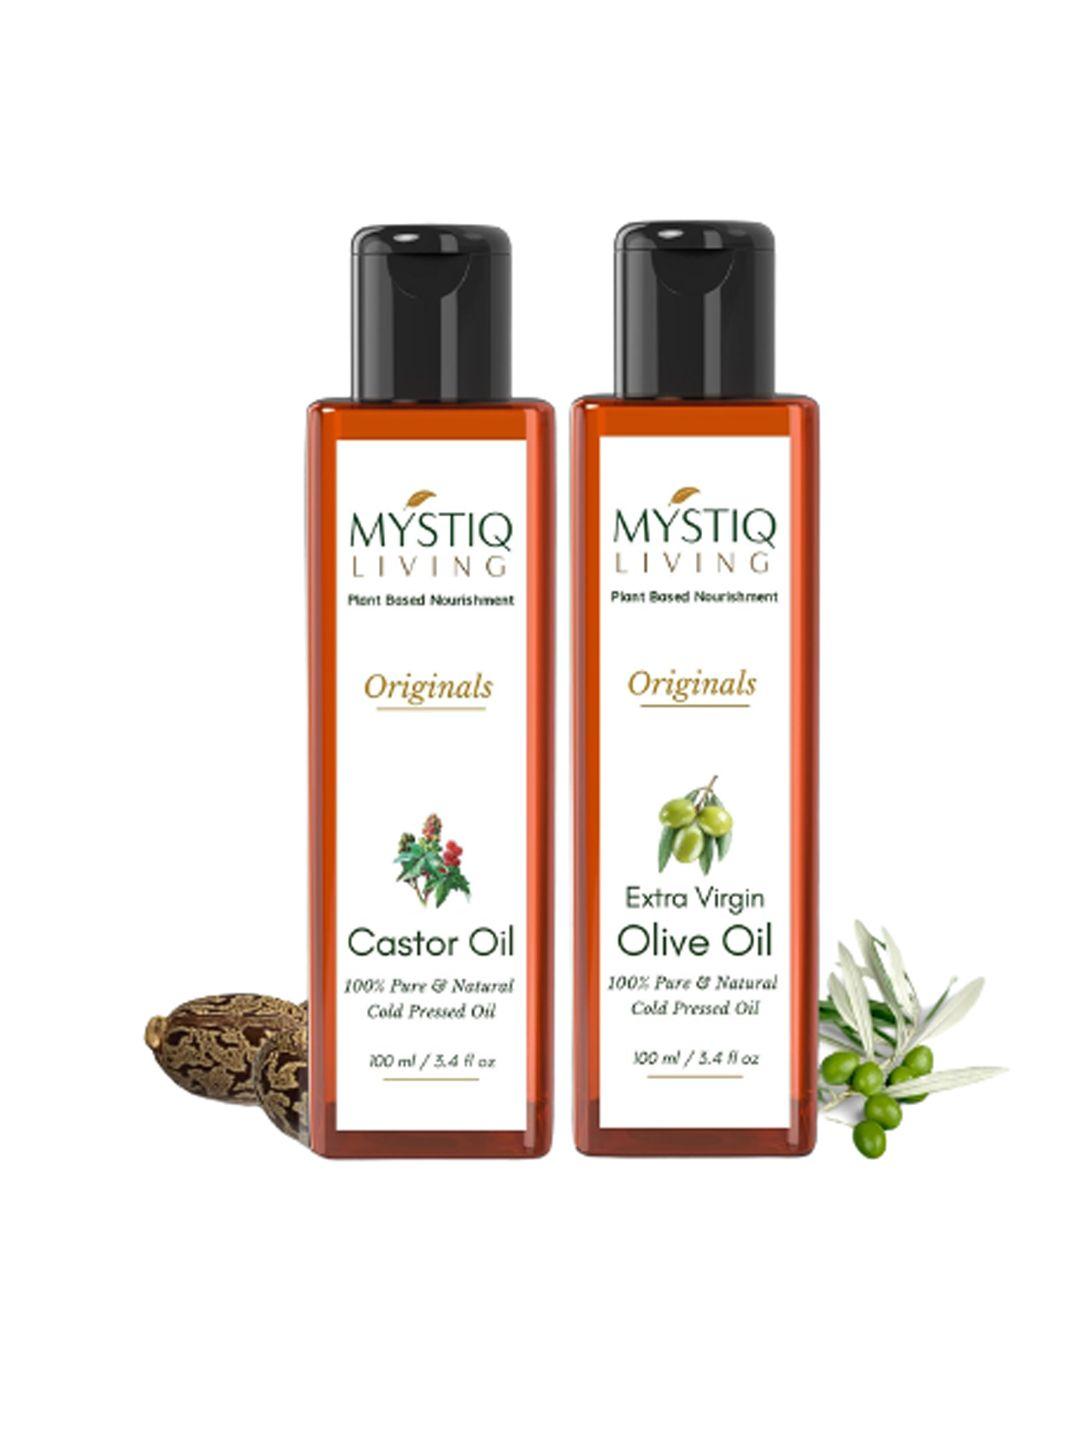 mystiq living 100% pure cold-pressed castor & olive hair & skin care oil - 100ml each